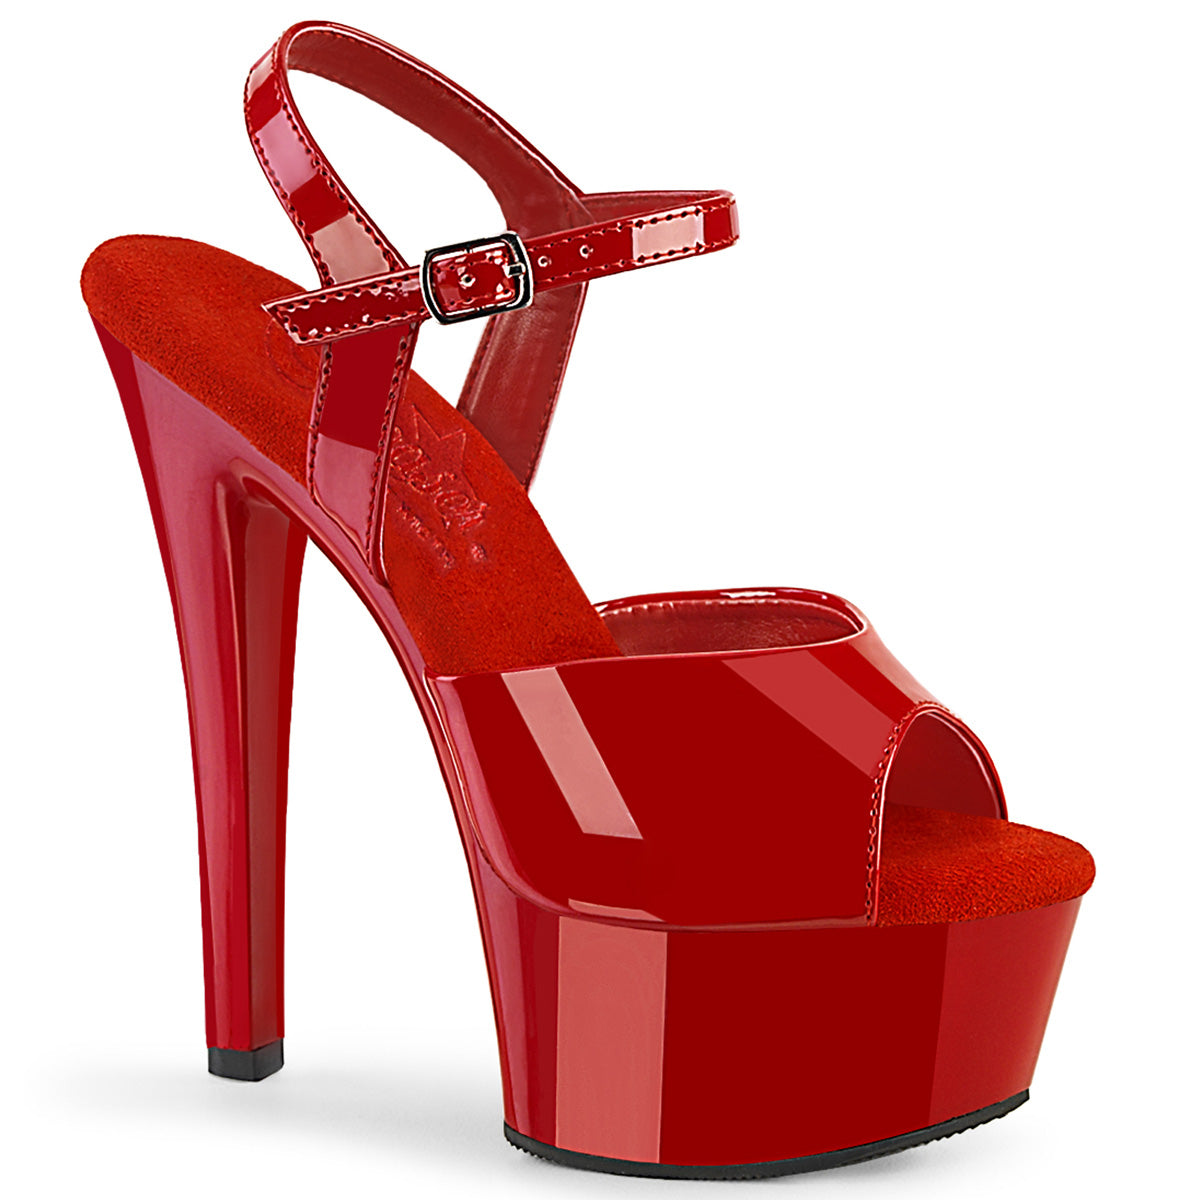 Pleaser GLEAM-609 Red Pat 6 Inch (152mm) Heel, 1 3/4 Inch (44mm) Platform Comfort Width Ankle Strap Sandal